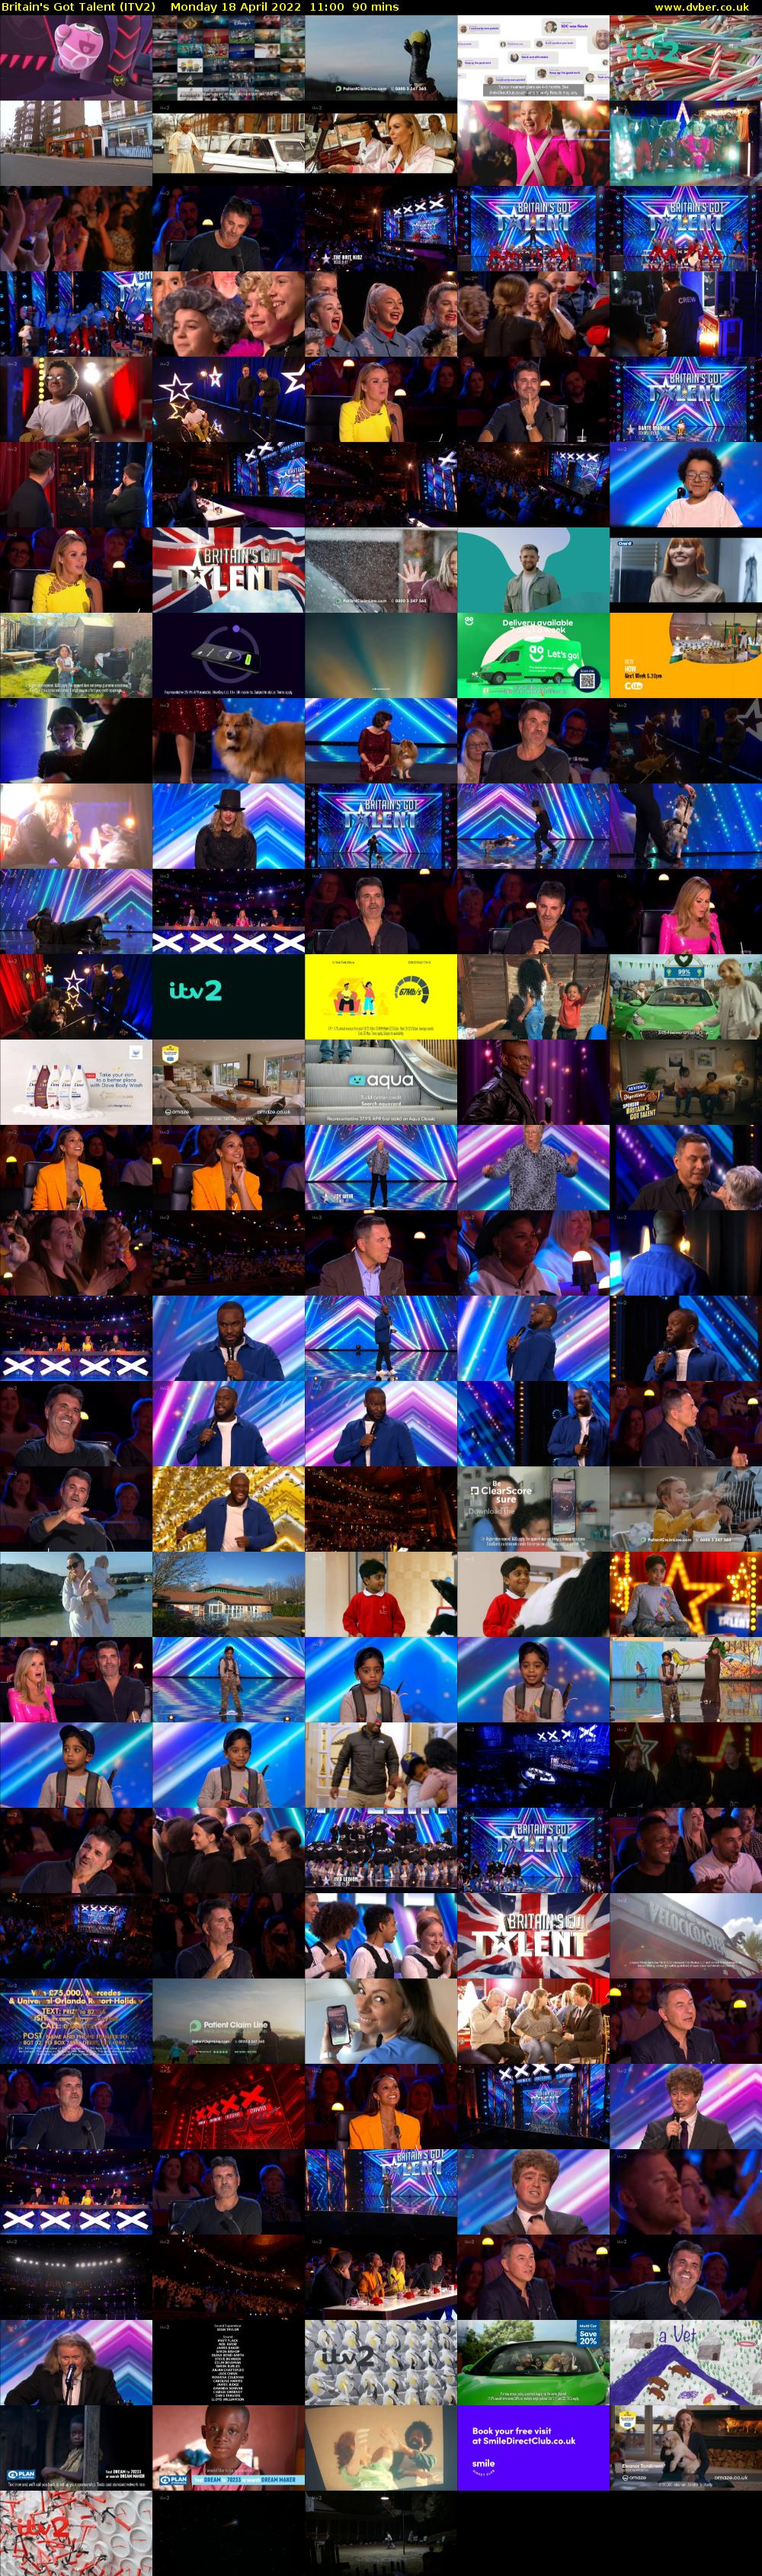 Britain's Got Talent (ITV2) Monday 18 April 2022 11:00 - 12:30